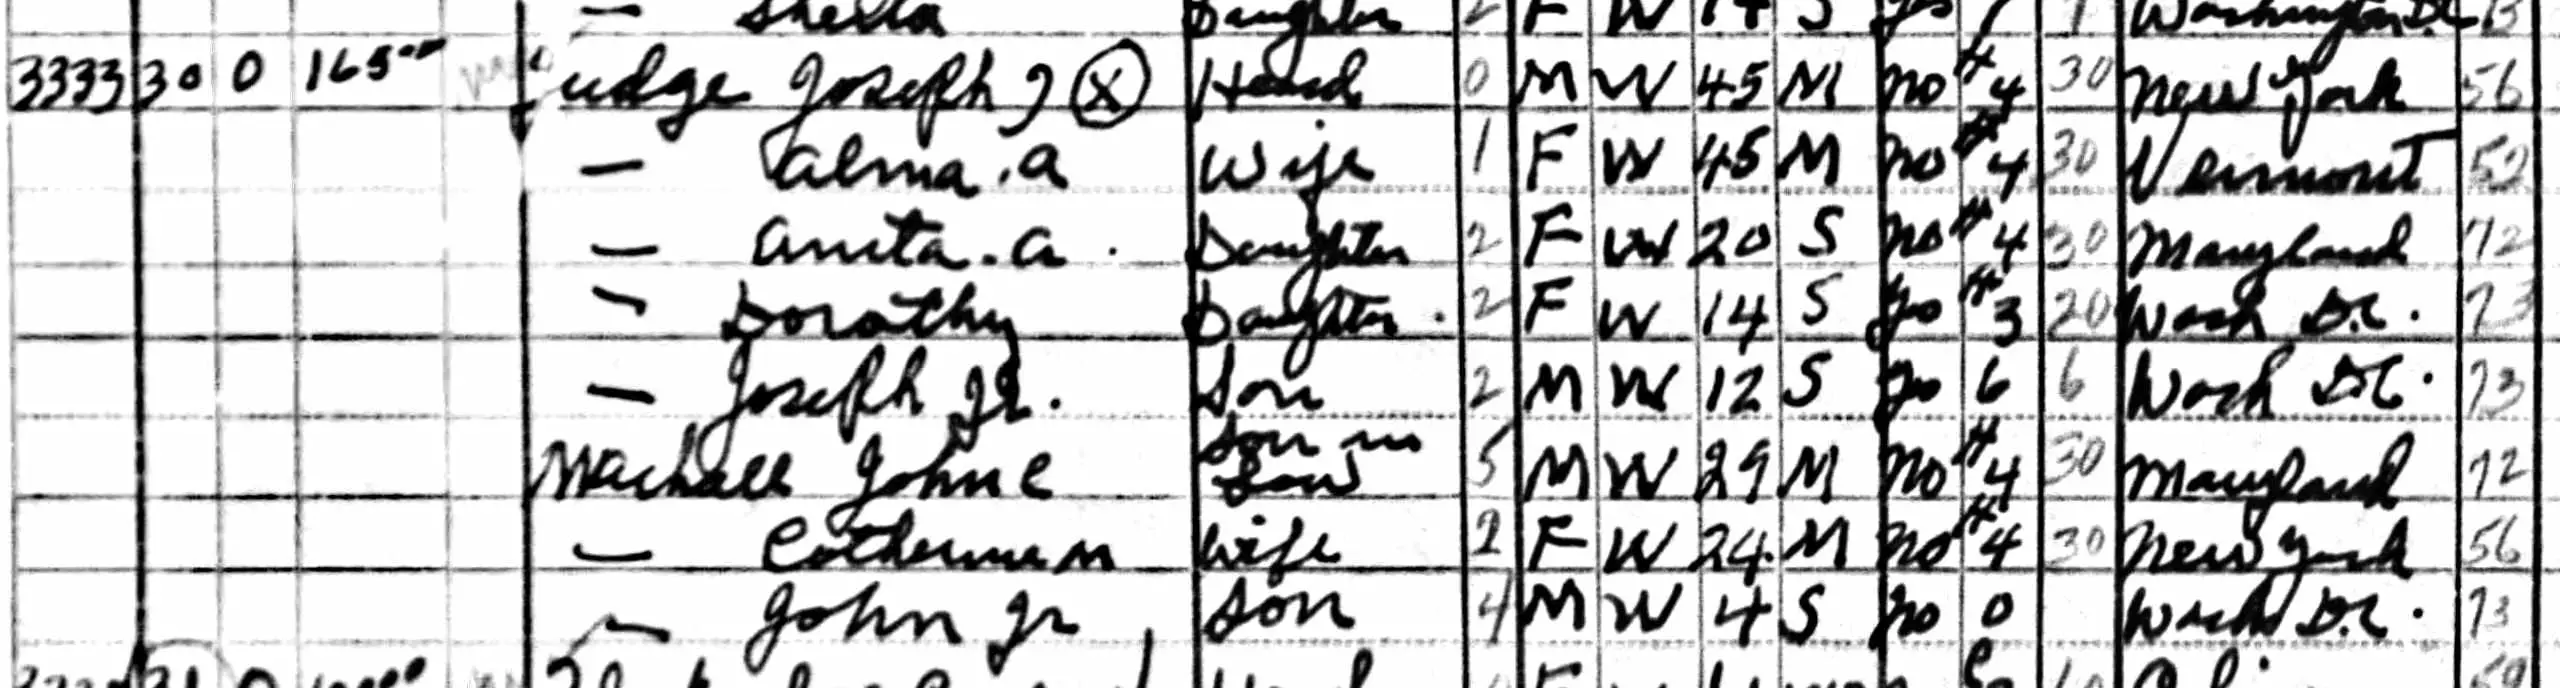 Joe Judge household in the 1940 U.S. Census (Ancestry.com)